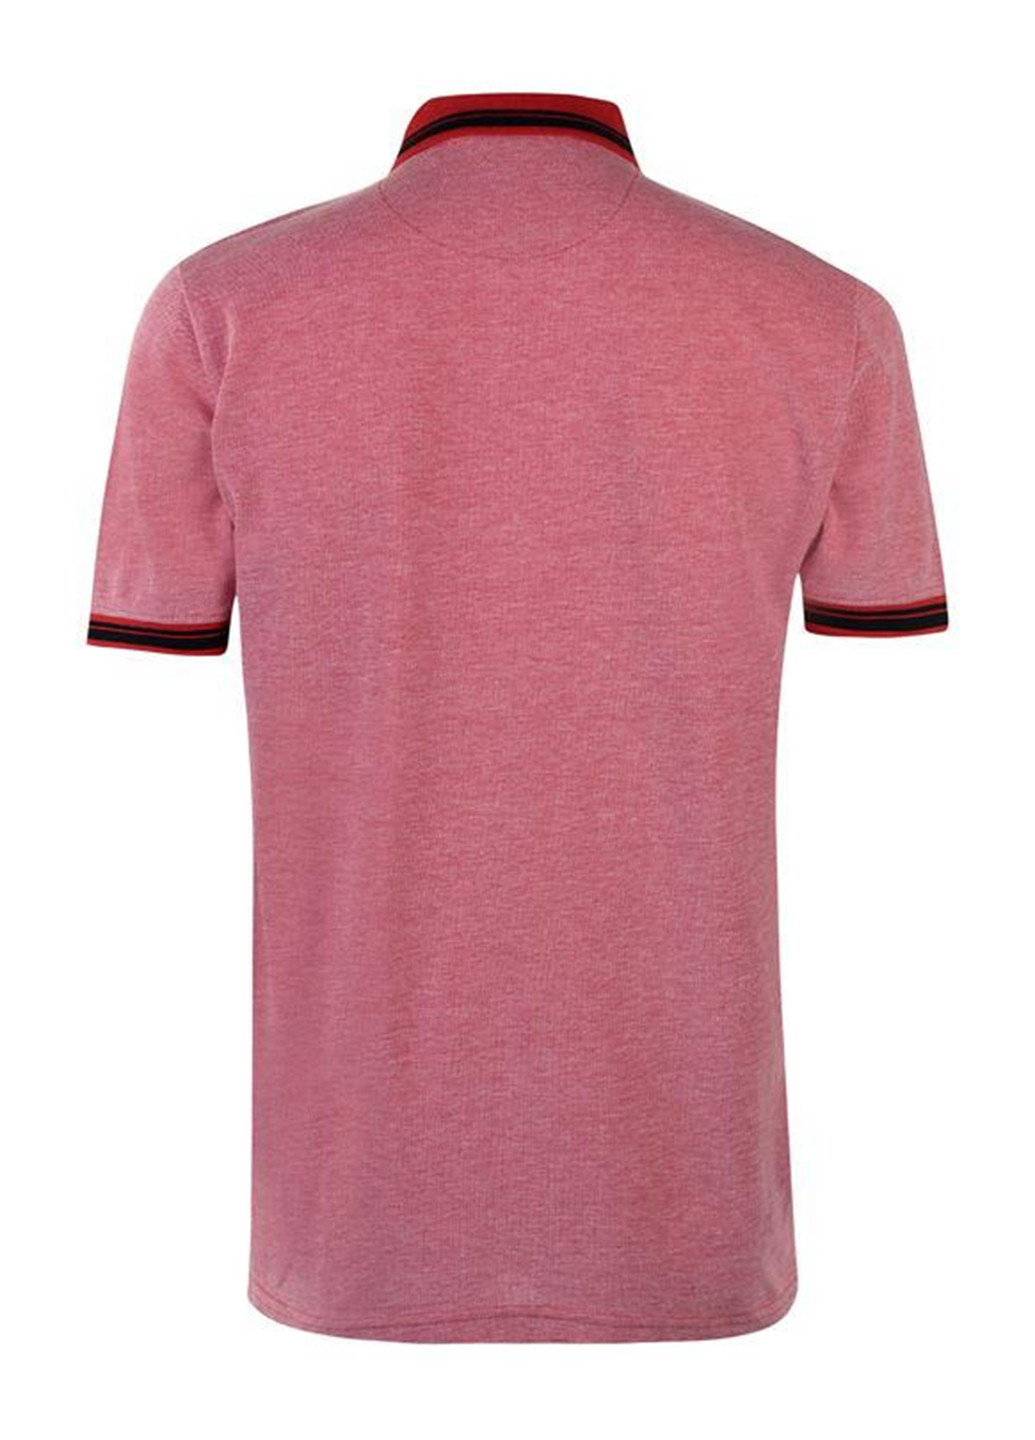 Бледно-красная футболка-поло для мужчин Pierre Cardin меланжевая